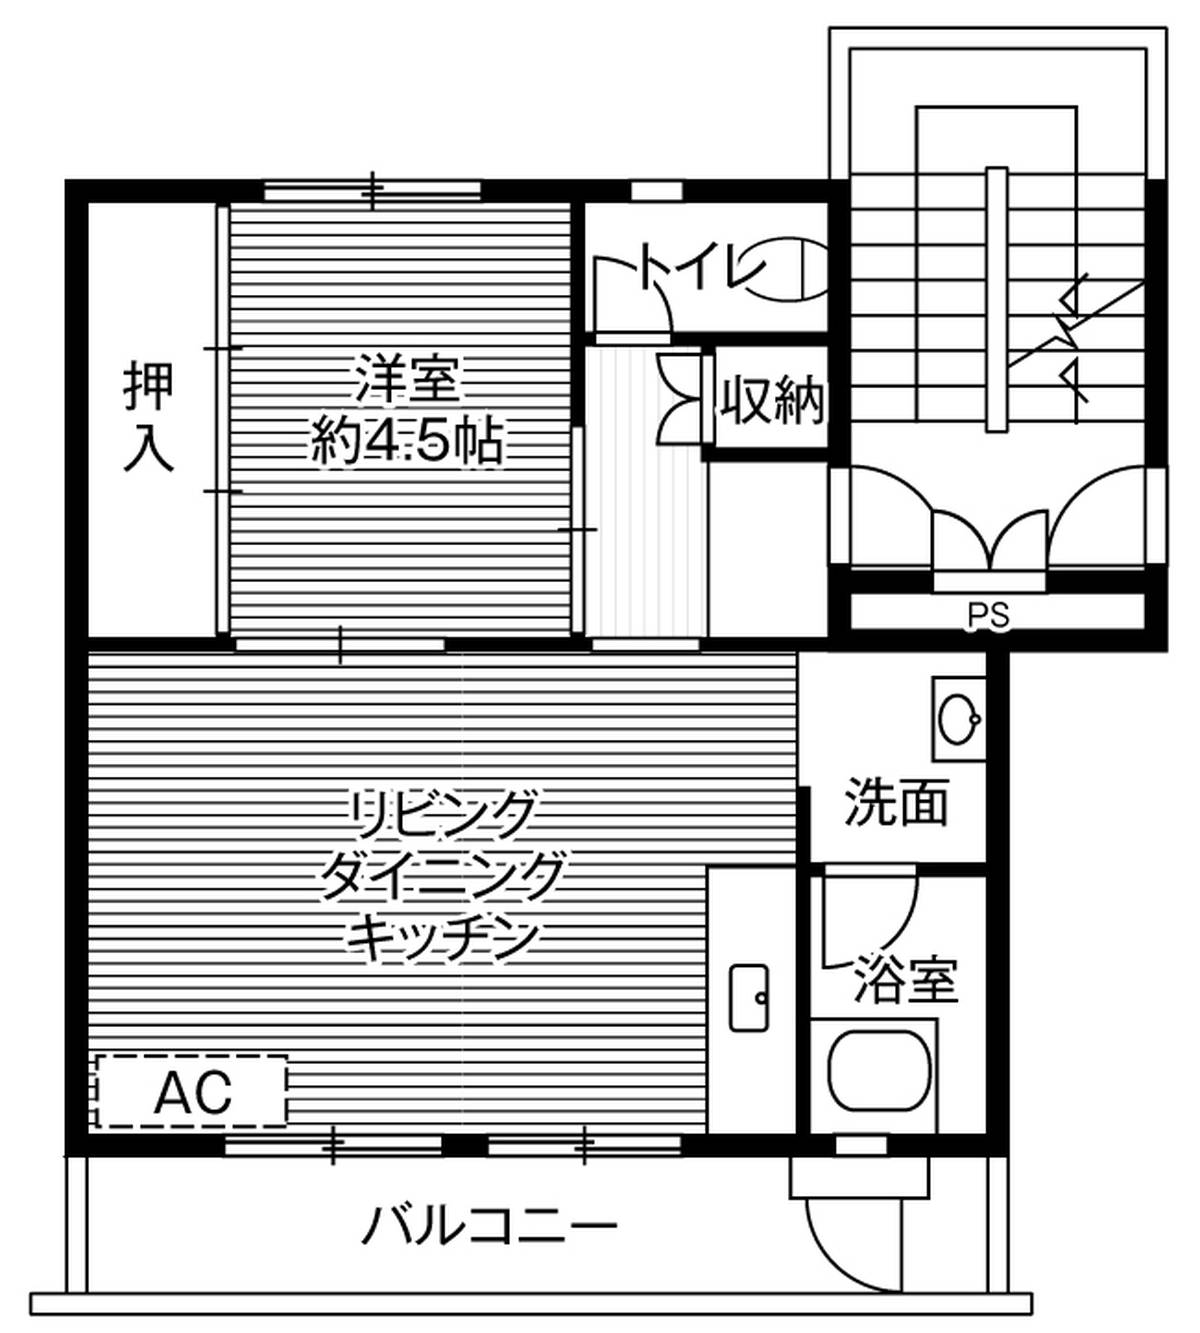 1LDK floorplan of Village House Ashikaga Hajika in Ashikaga-shi